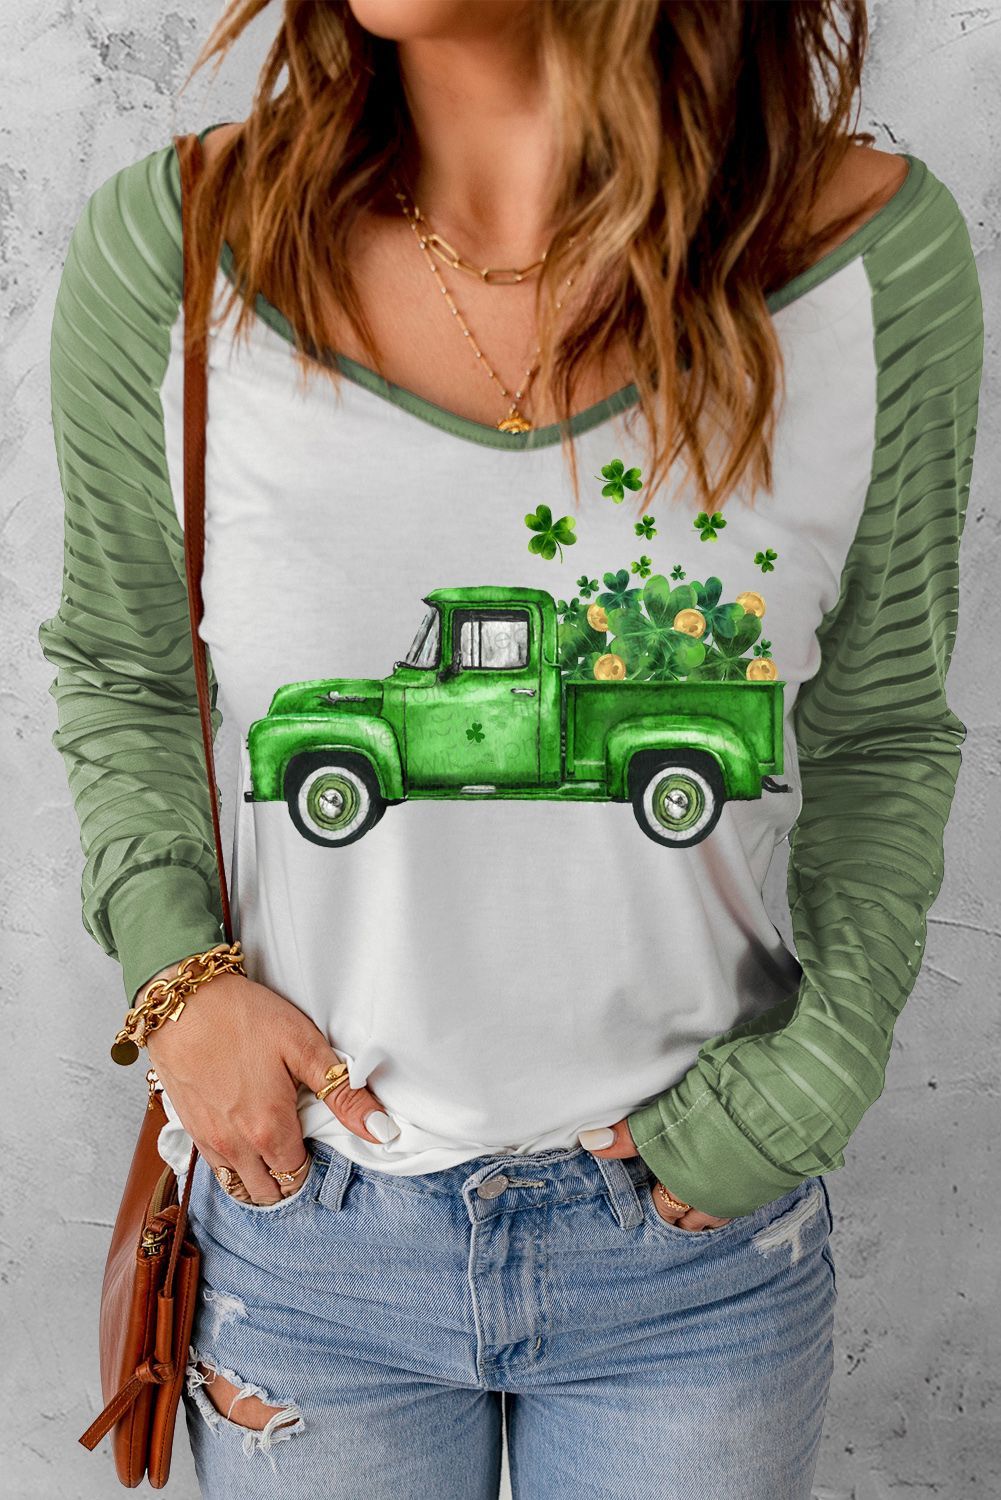 LC25120006-9-S, LC25120006-9-M, LC25120006-9-L, LC25120006-9-XL, LC25120006-9-2XL, Green St. Patricks Day Shirts Truck Graphic Long Sleeve T-Shirt